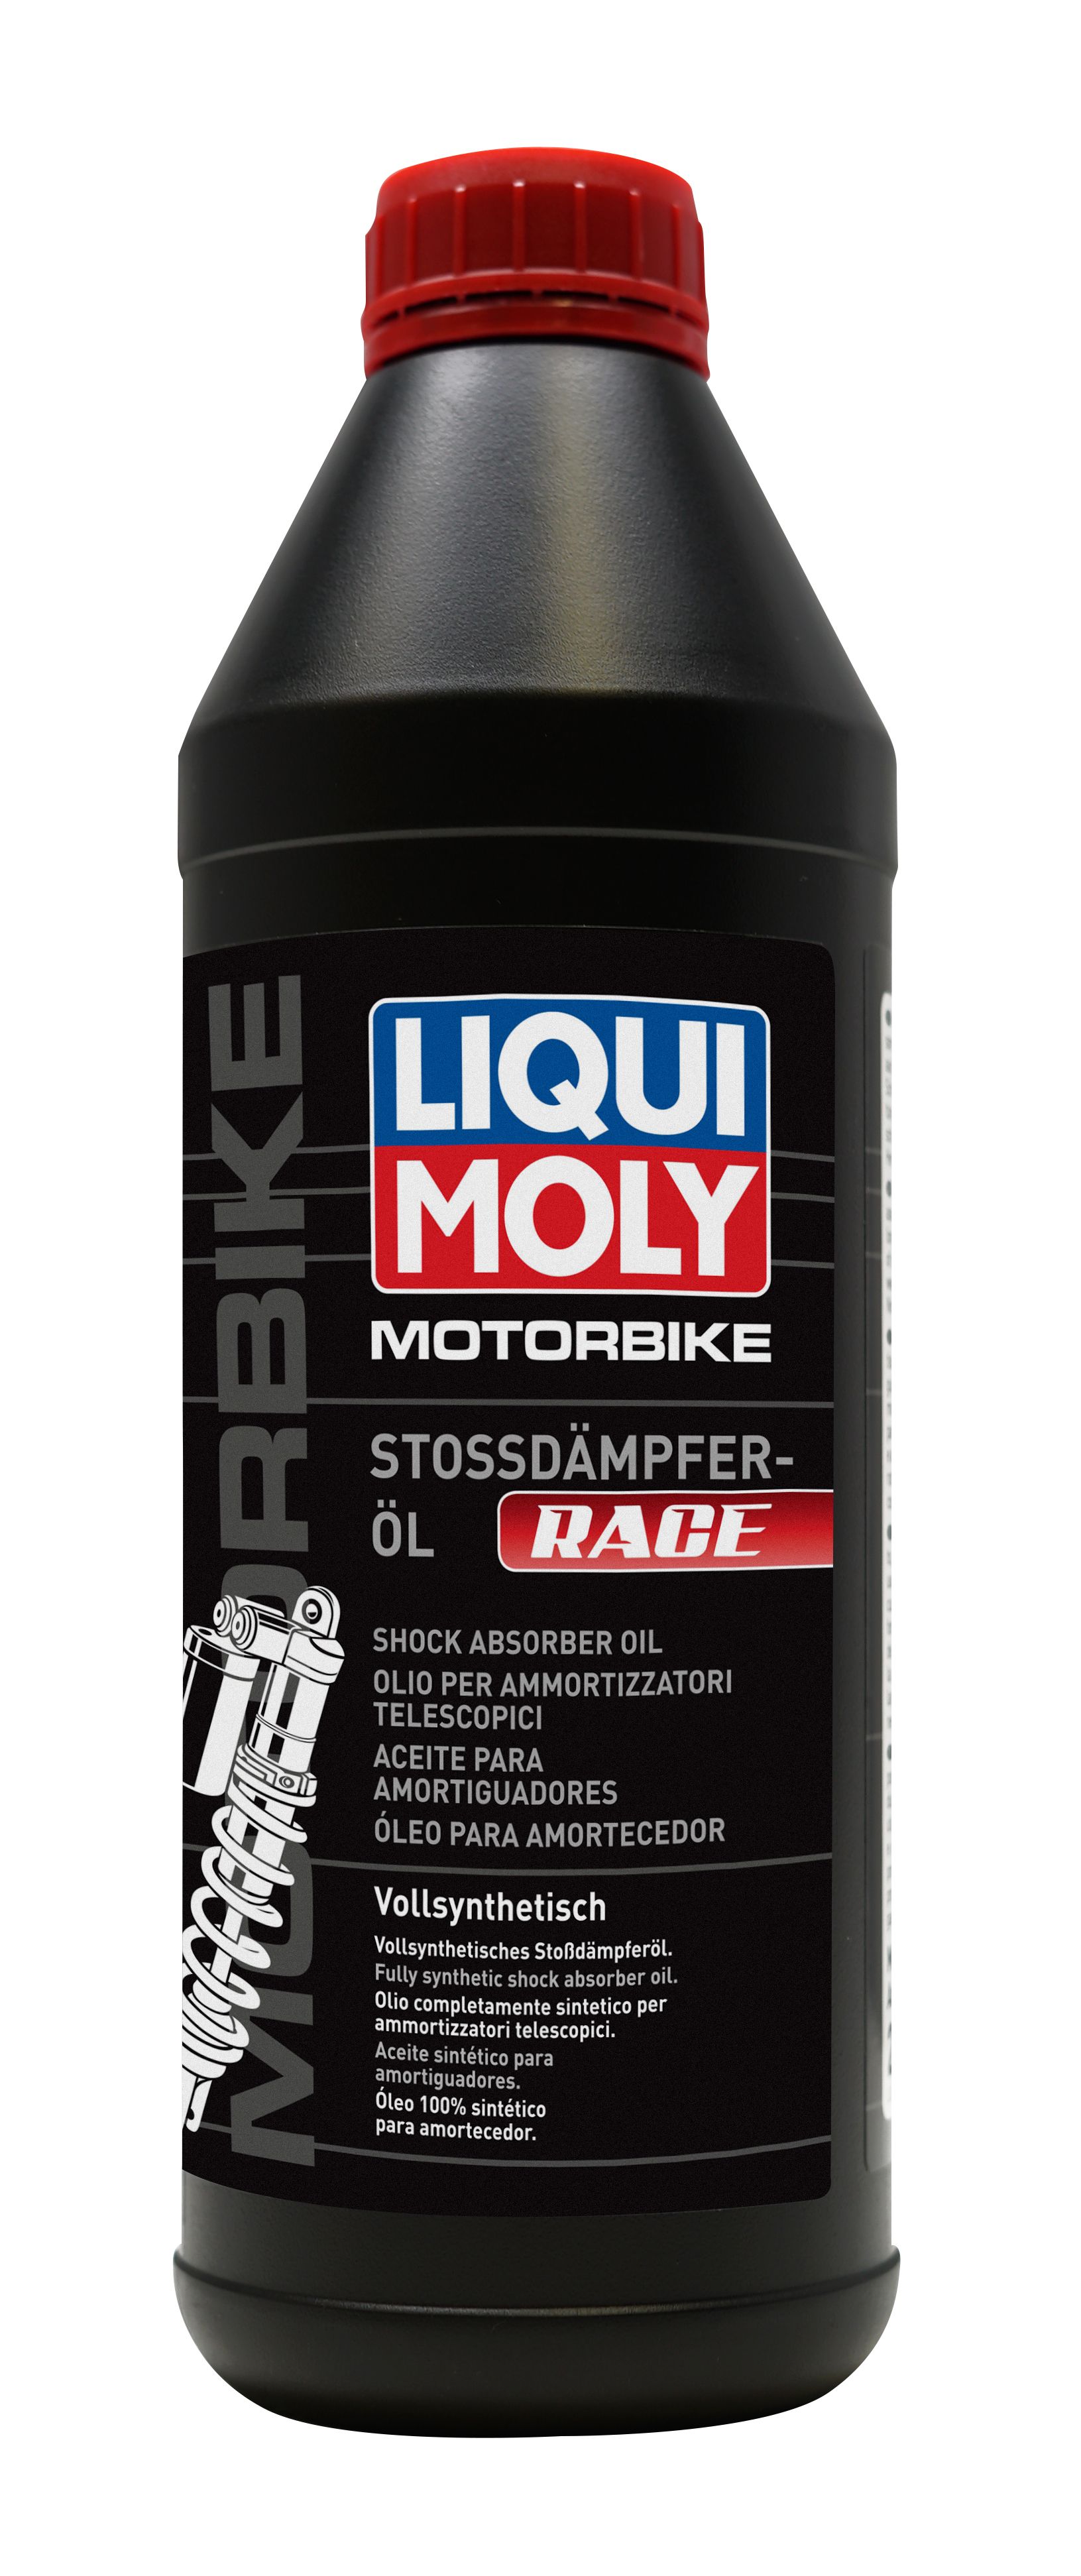 Масло вилочное и амортизаторное Liqui Moly Motorbike Stossdaempferoel VS RACE